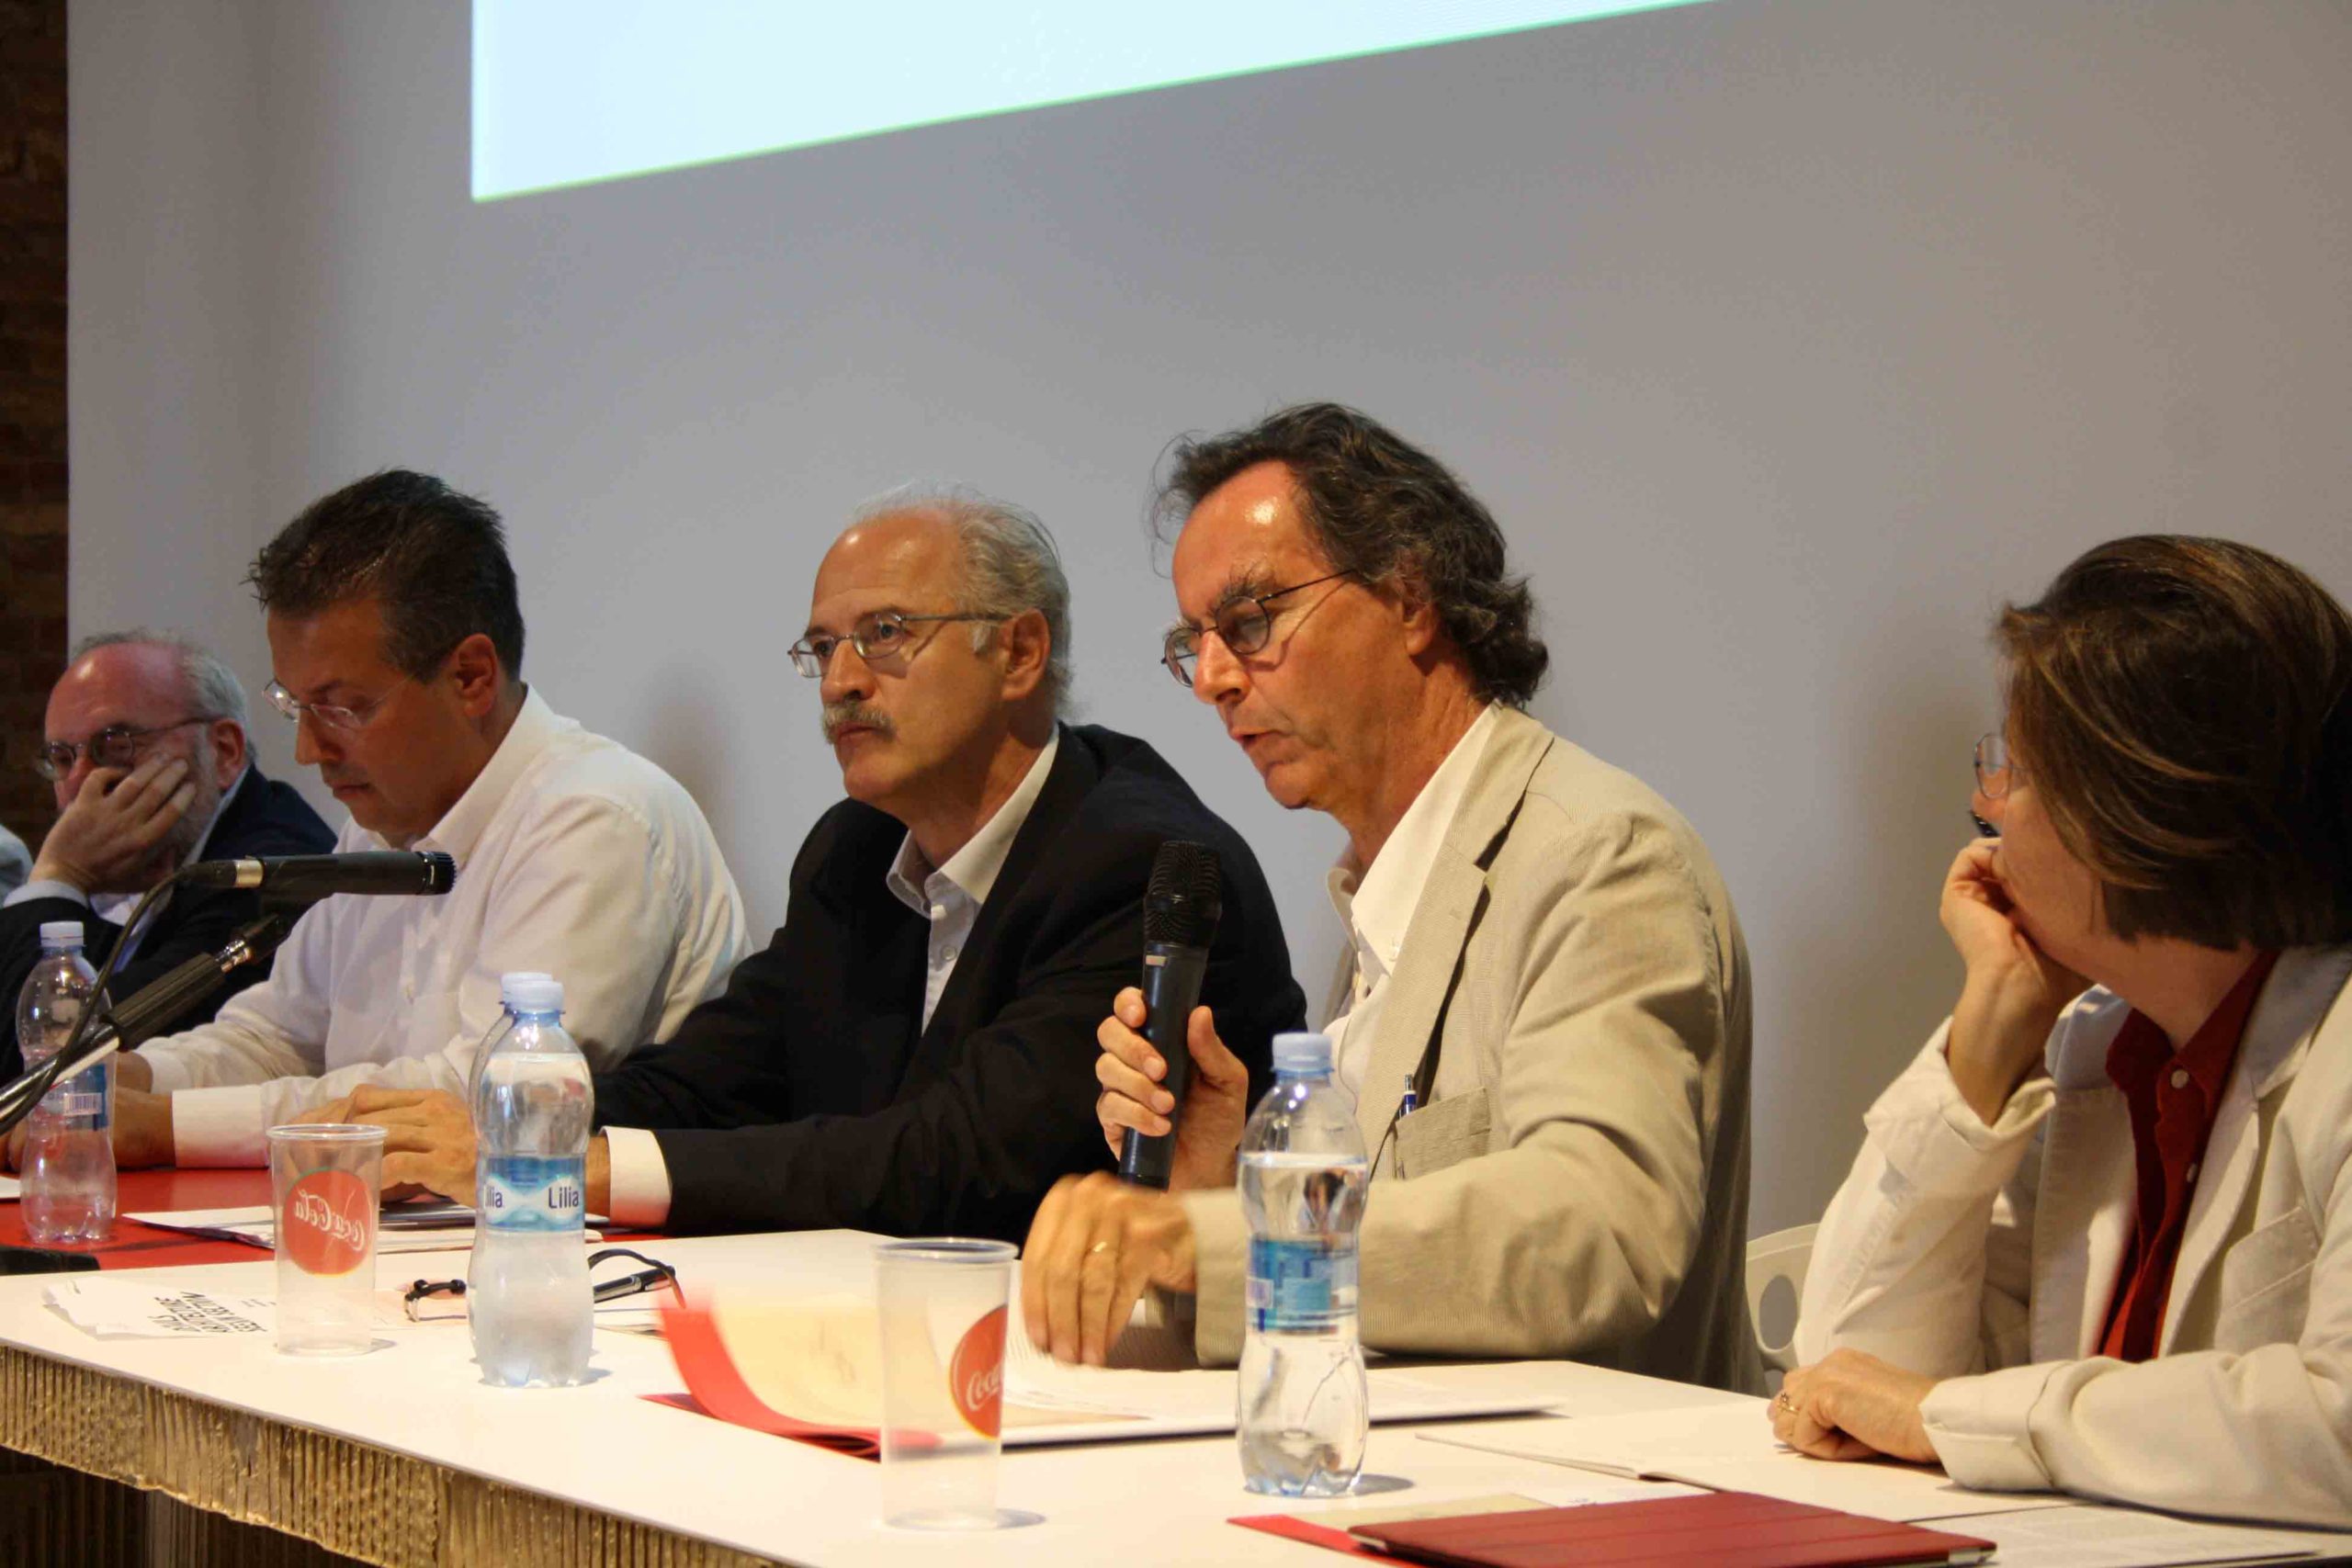 Prof. Pierre Alain Croset, Politecnico di Torino